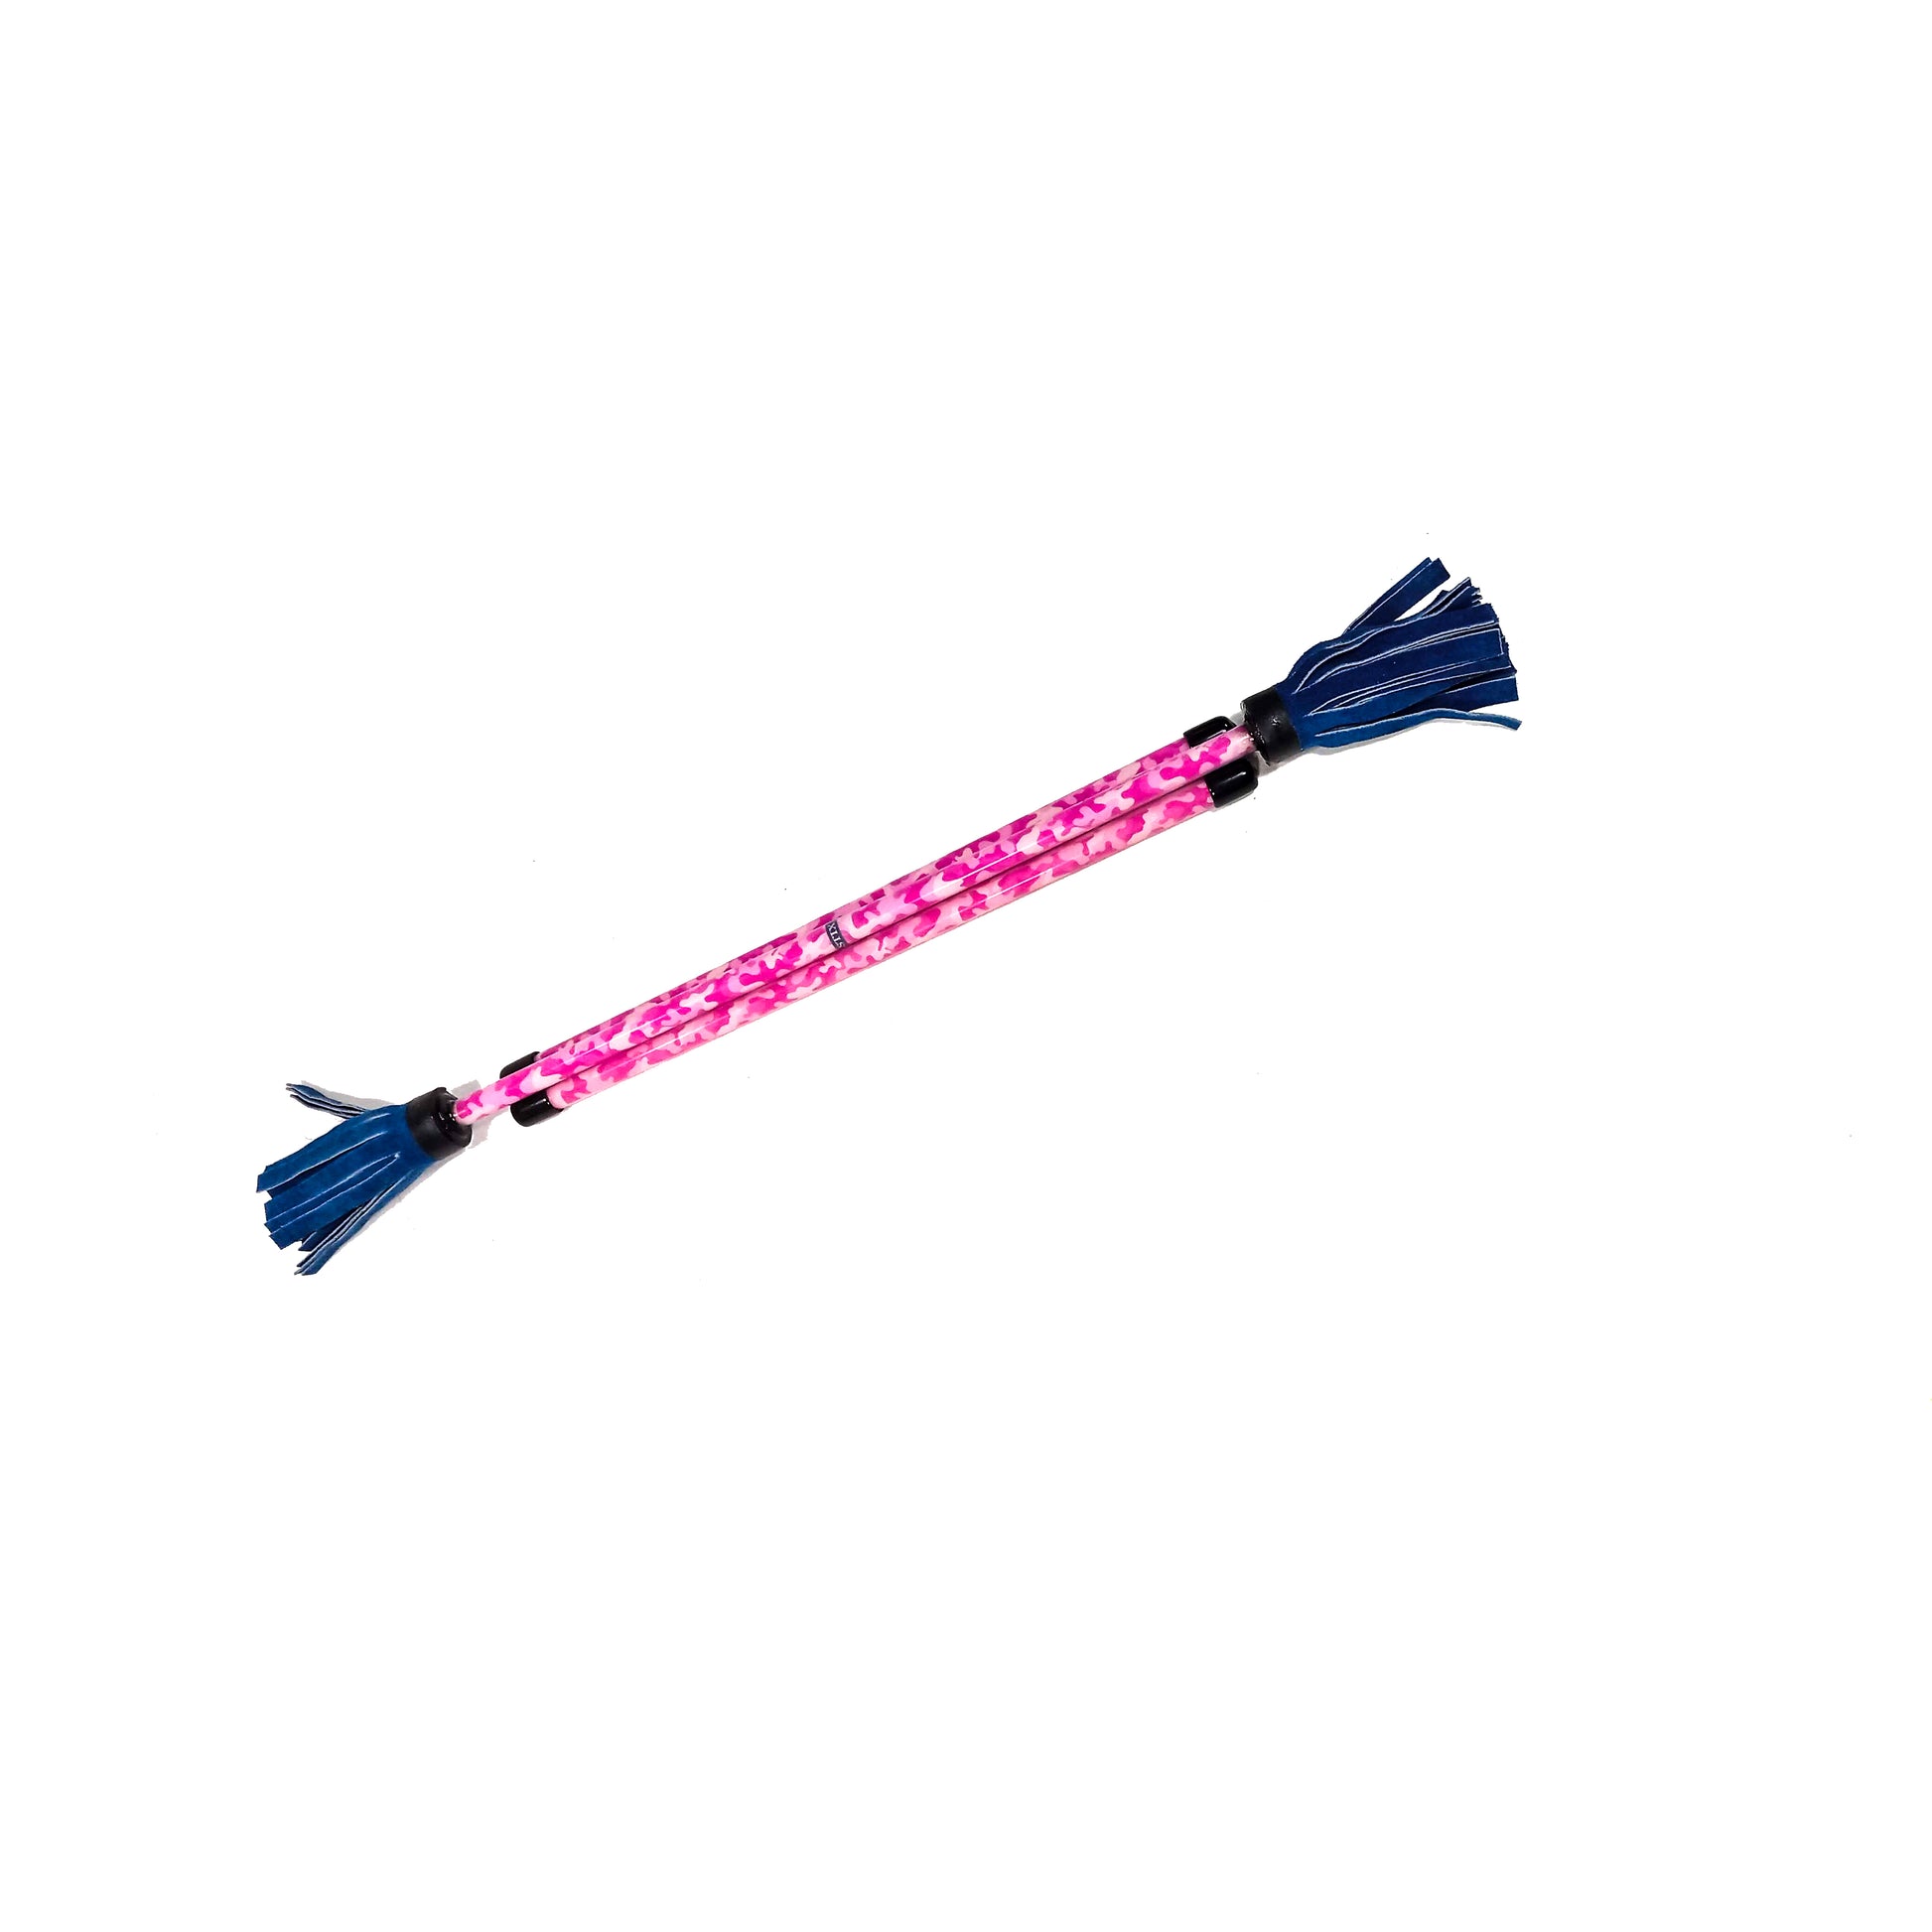 Z-Stix Professional Juggling Flower Sticks/Devil Sticks and 2 Hand Sticks,  High Quality, Beginner Friendly - Solid Series (Kid, Purple)